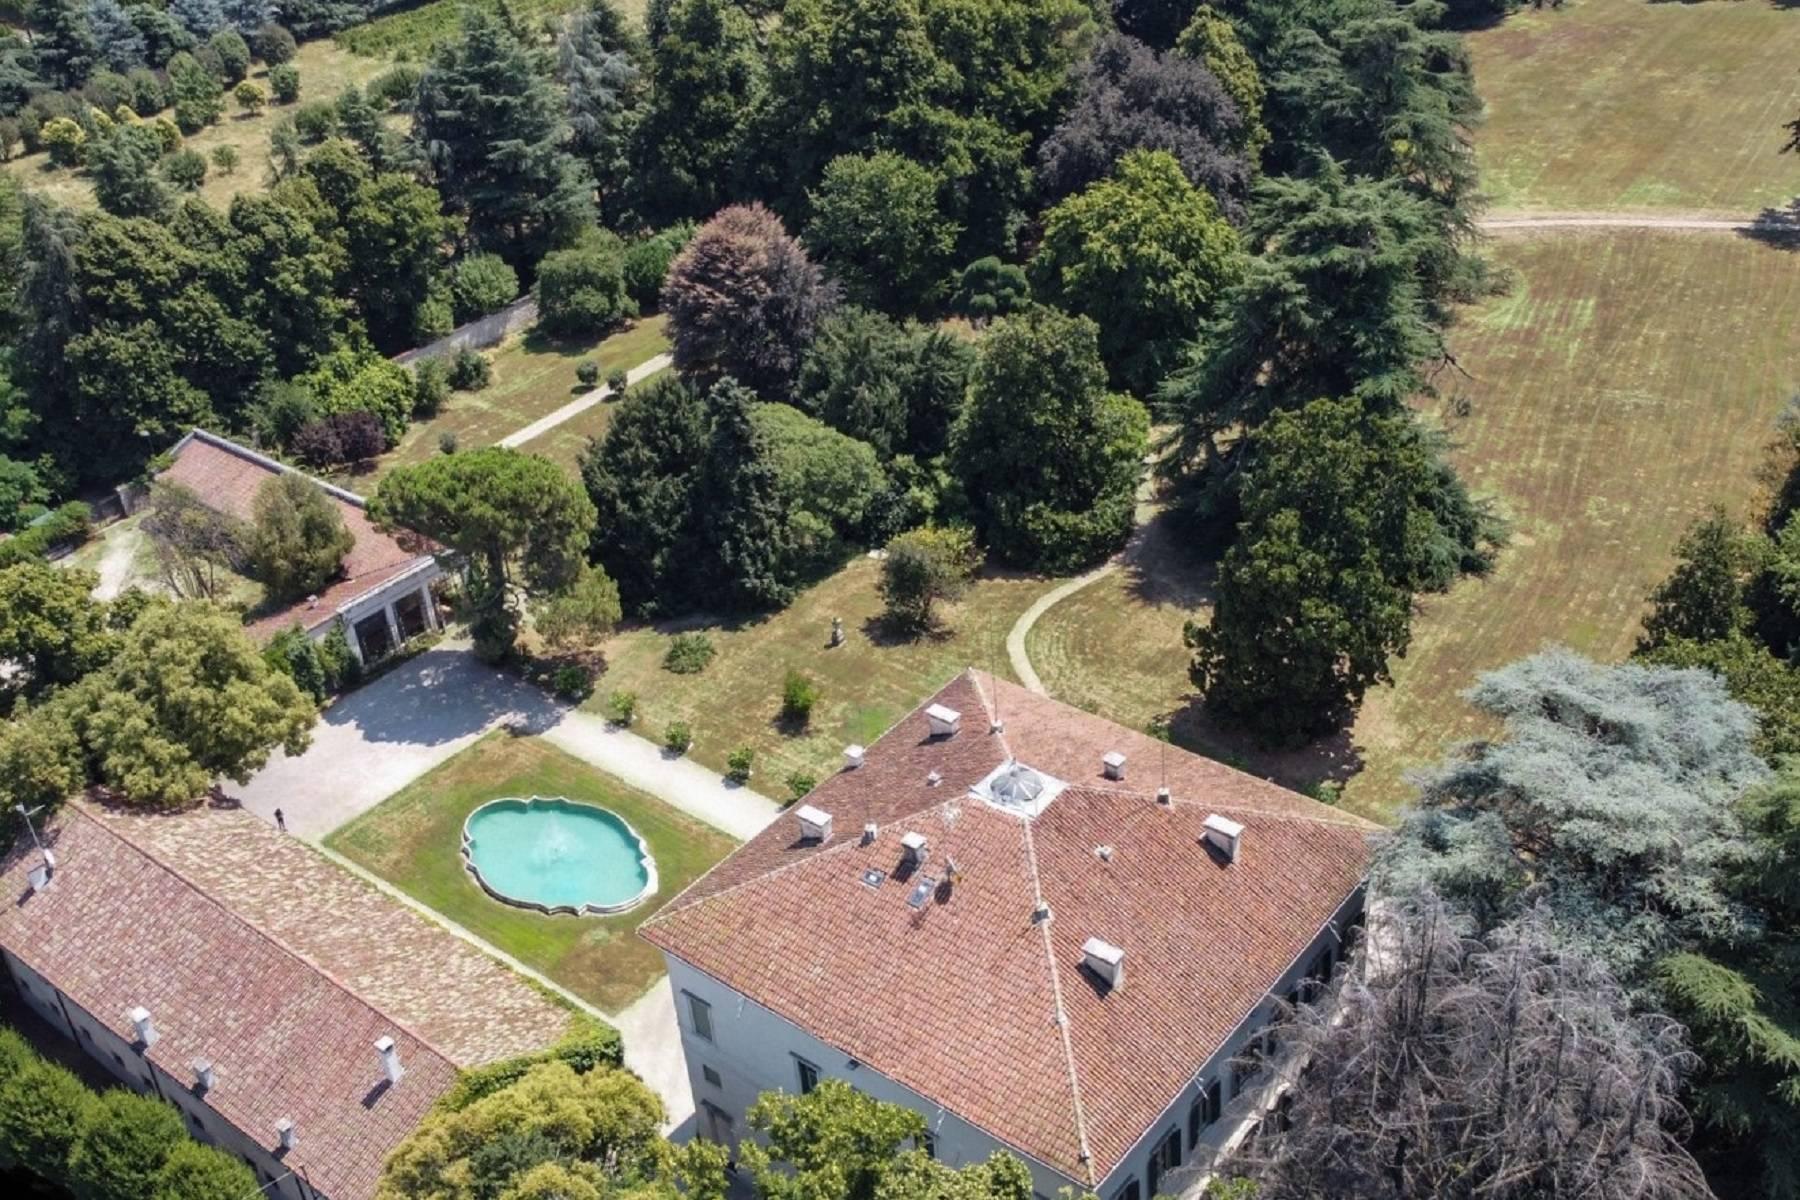 Elegante Villa Veneta con parco romantico e adiacenze - 32